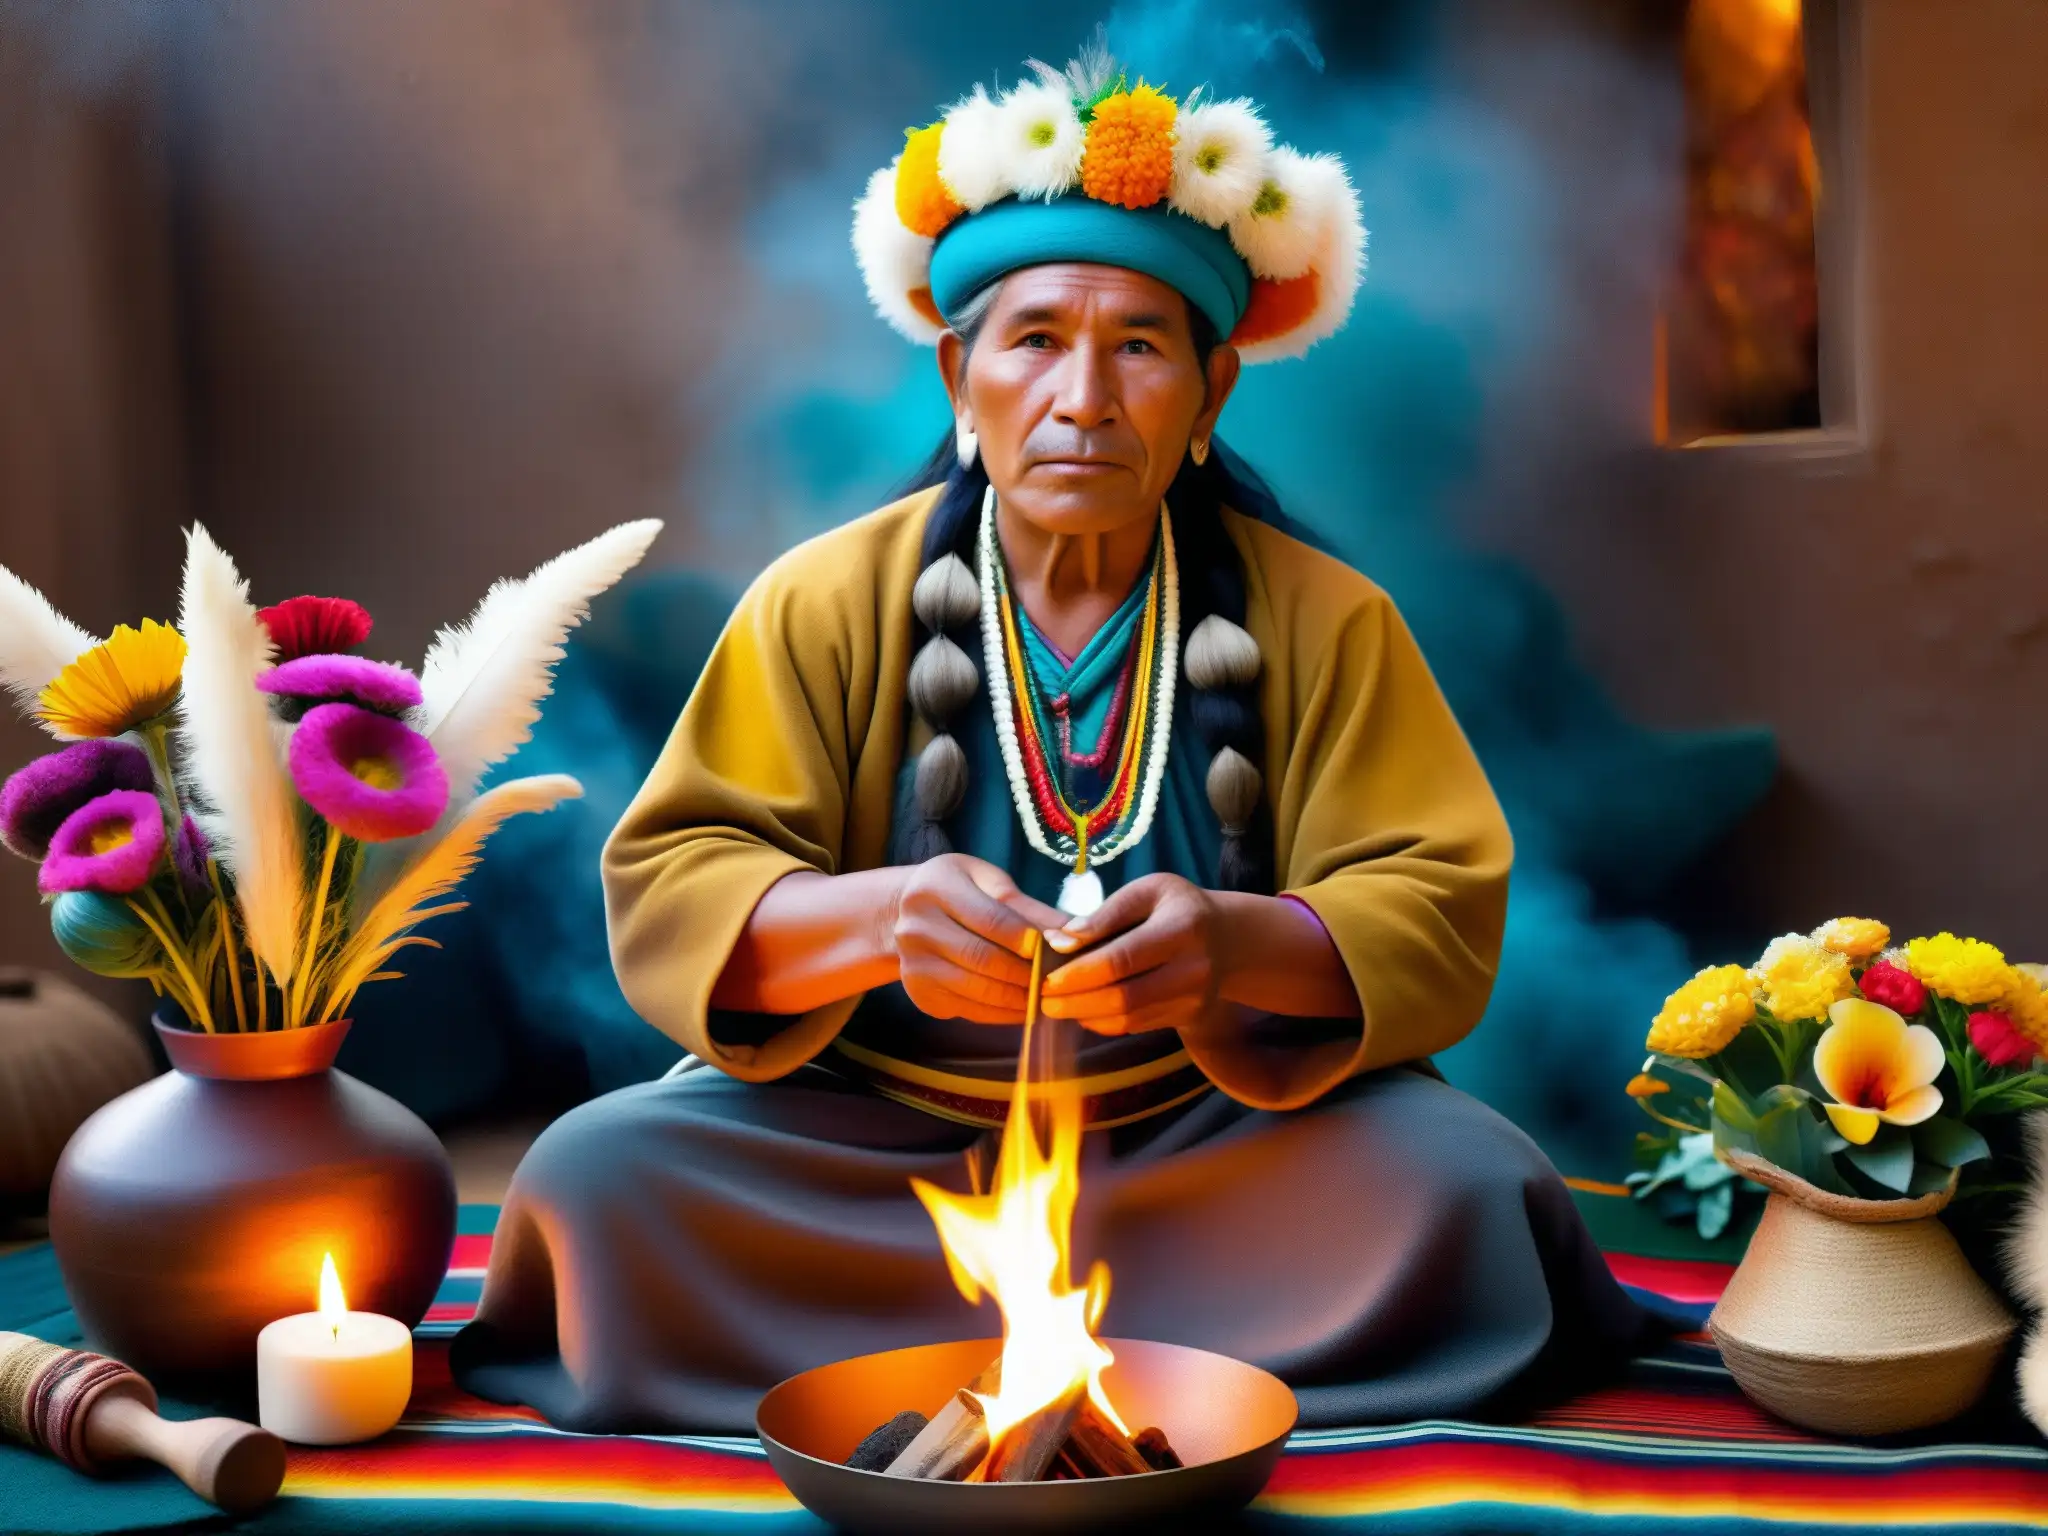 Un chamán andino realiza un ritual para honrar a Pachamama, rodeado de ofrendas coloridas en un ambiente místico y cautivador